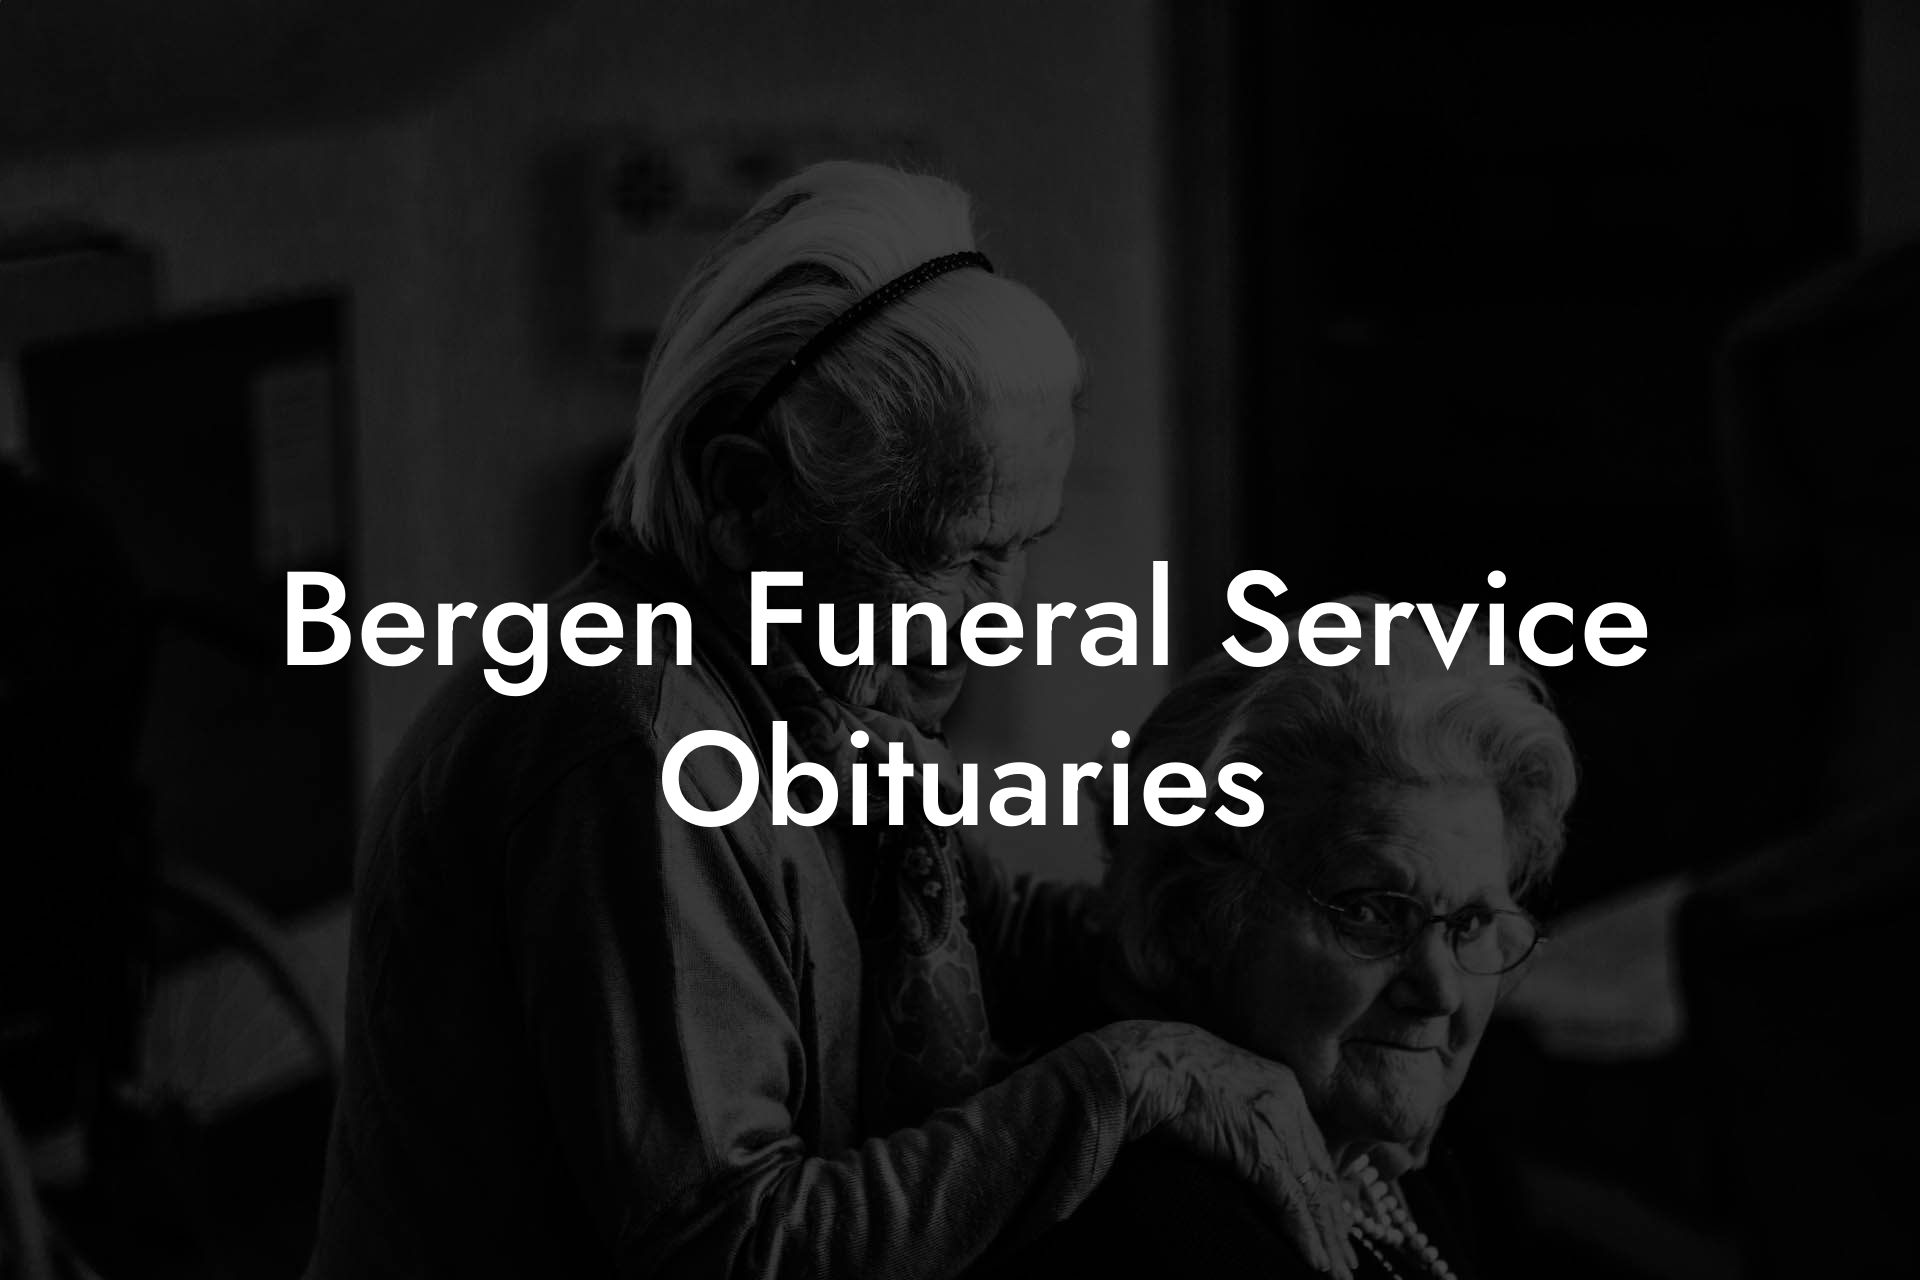 Bergen Funeral Service Obituaries